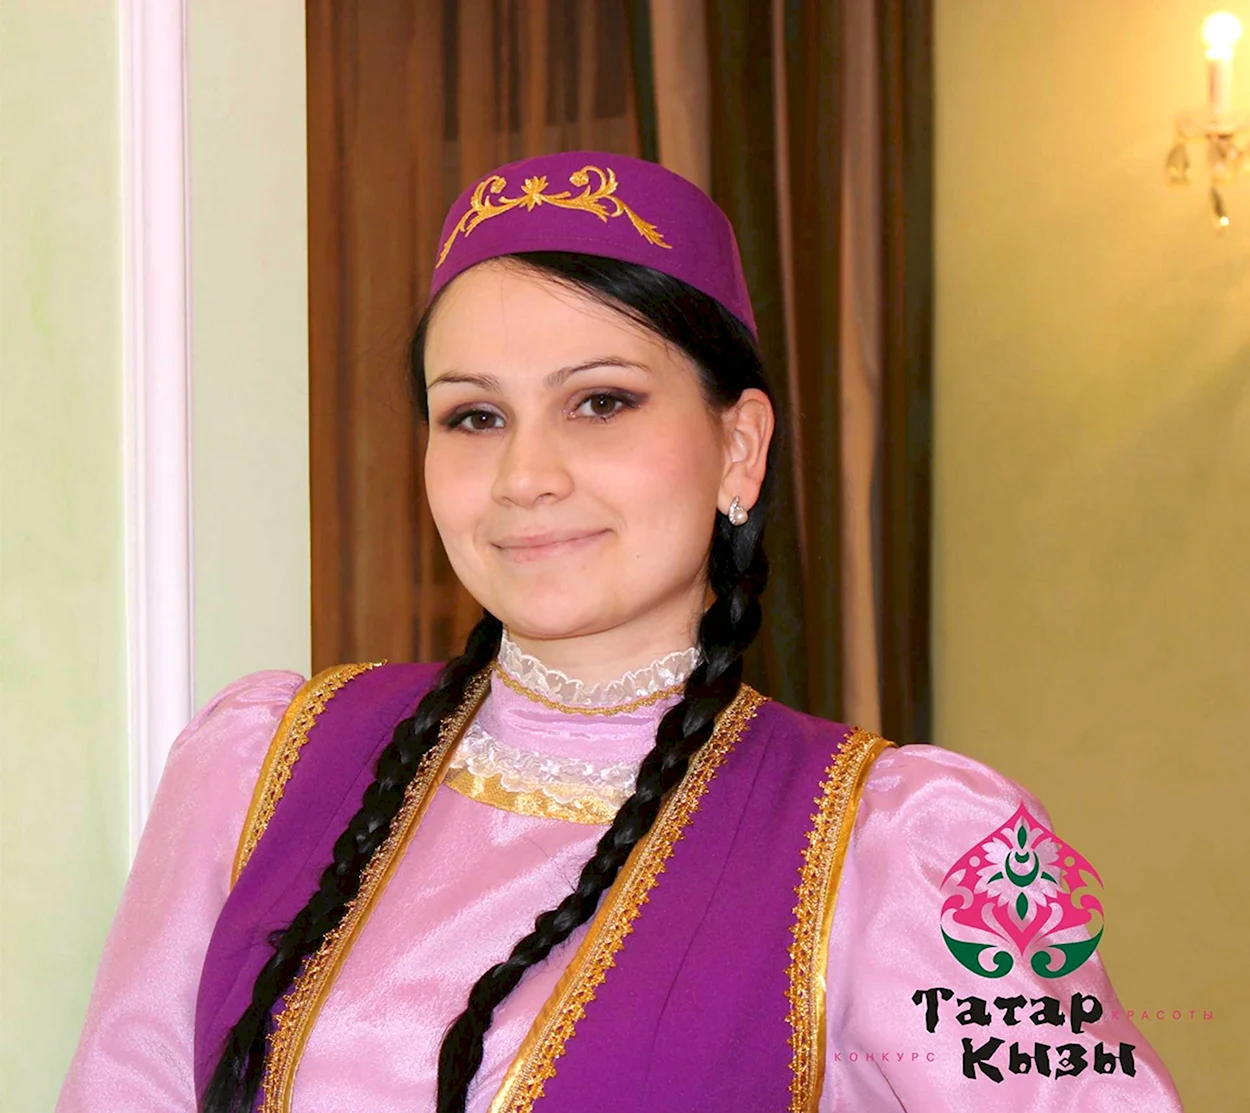 Рамиля Гиниятова финалистка татар кызы. Красивая девушка